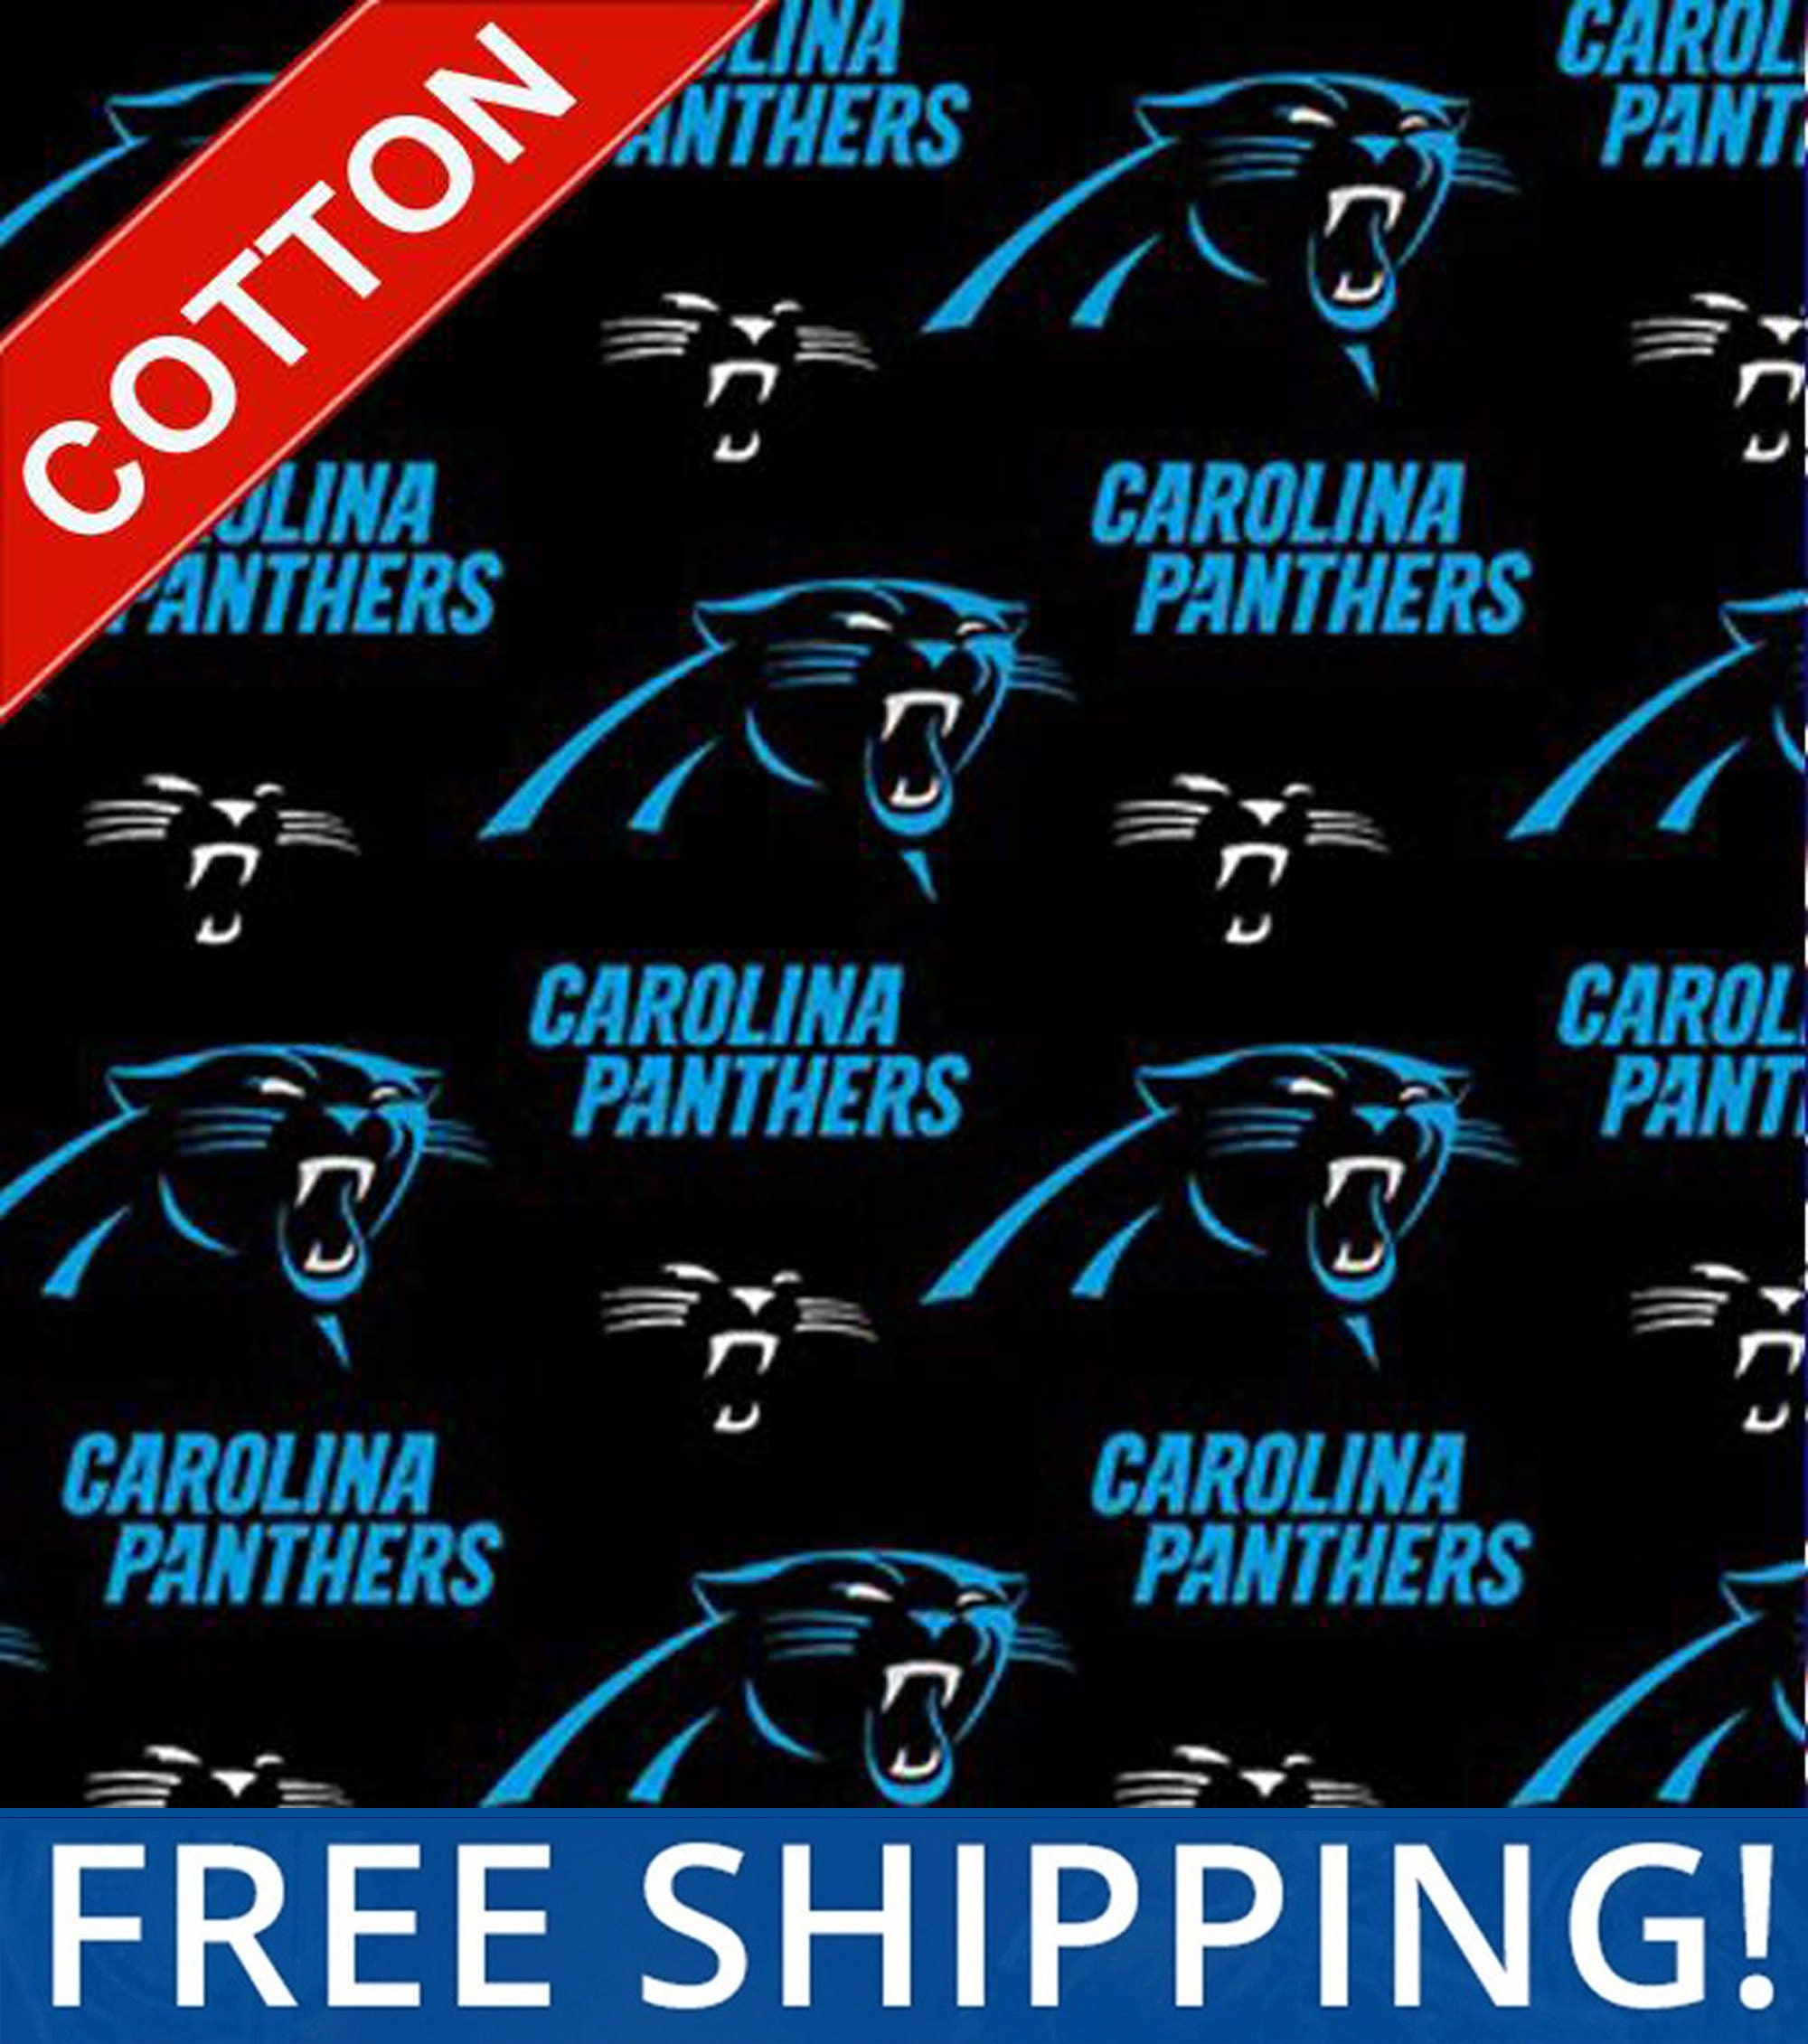 100+] Carolina Panthers Logo Pictures